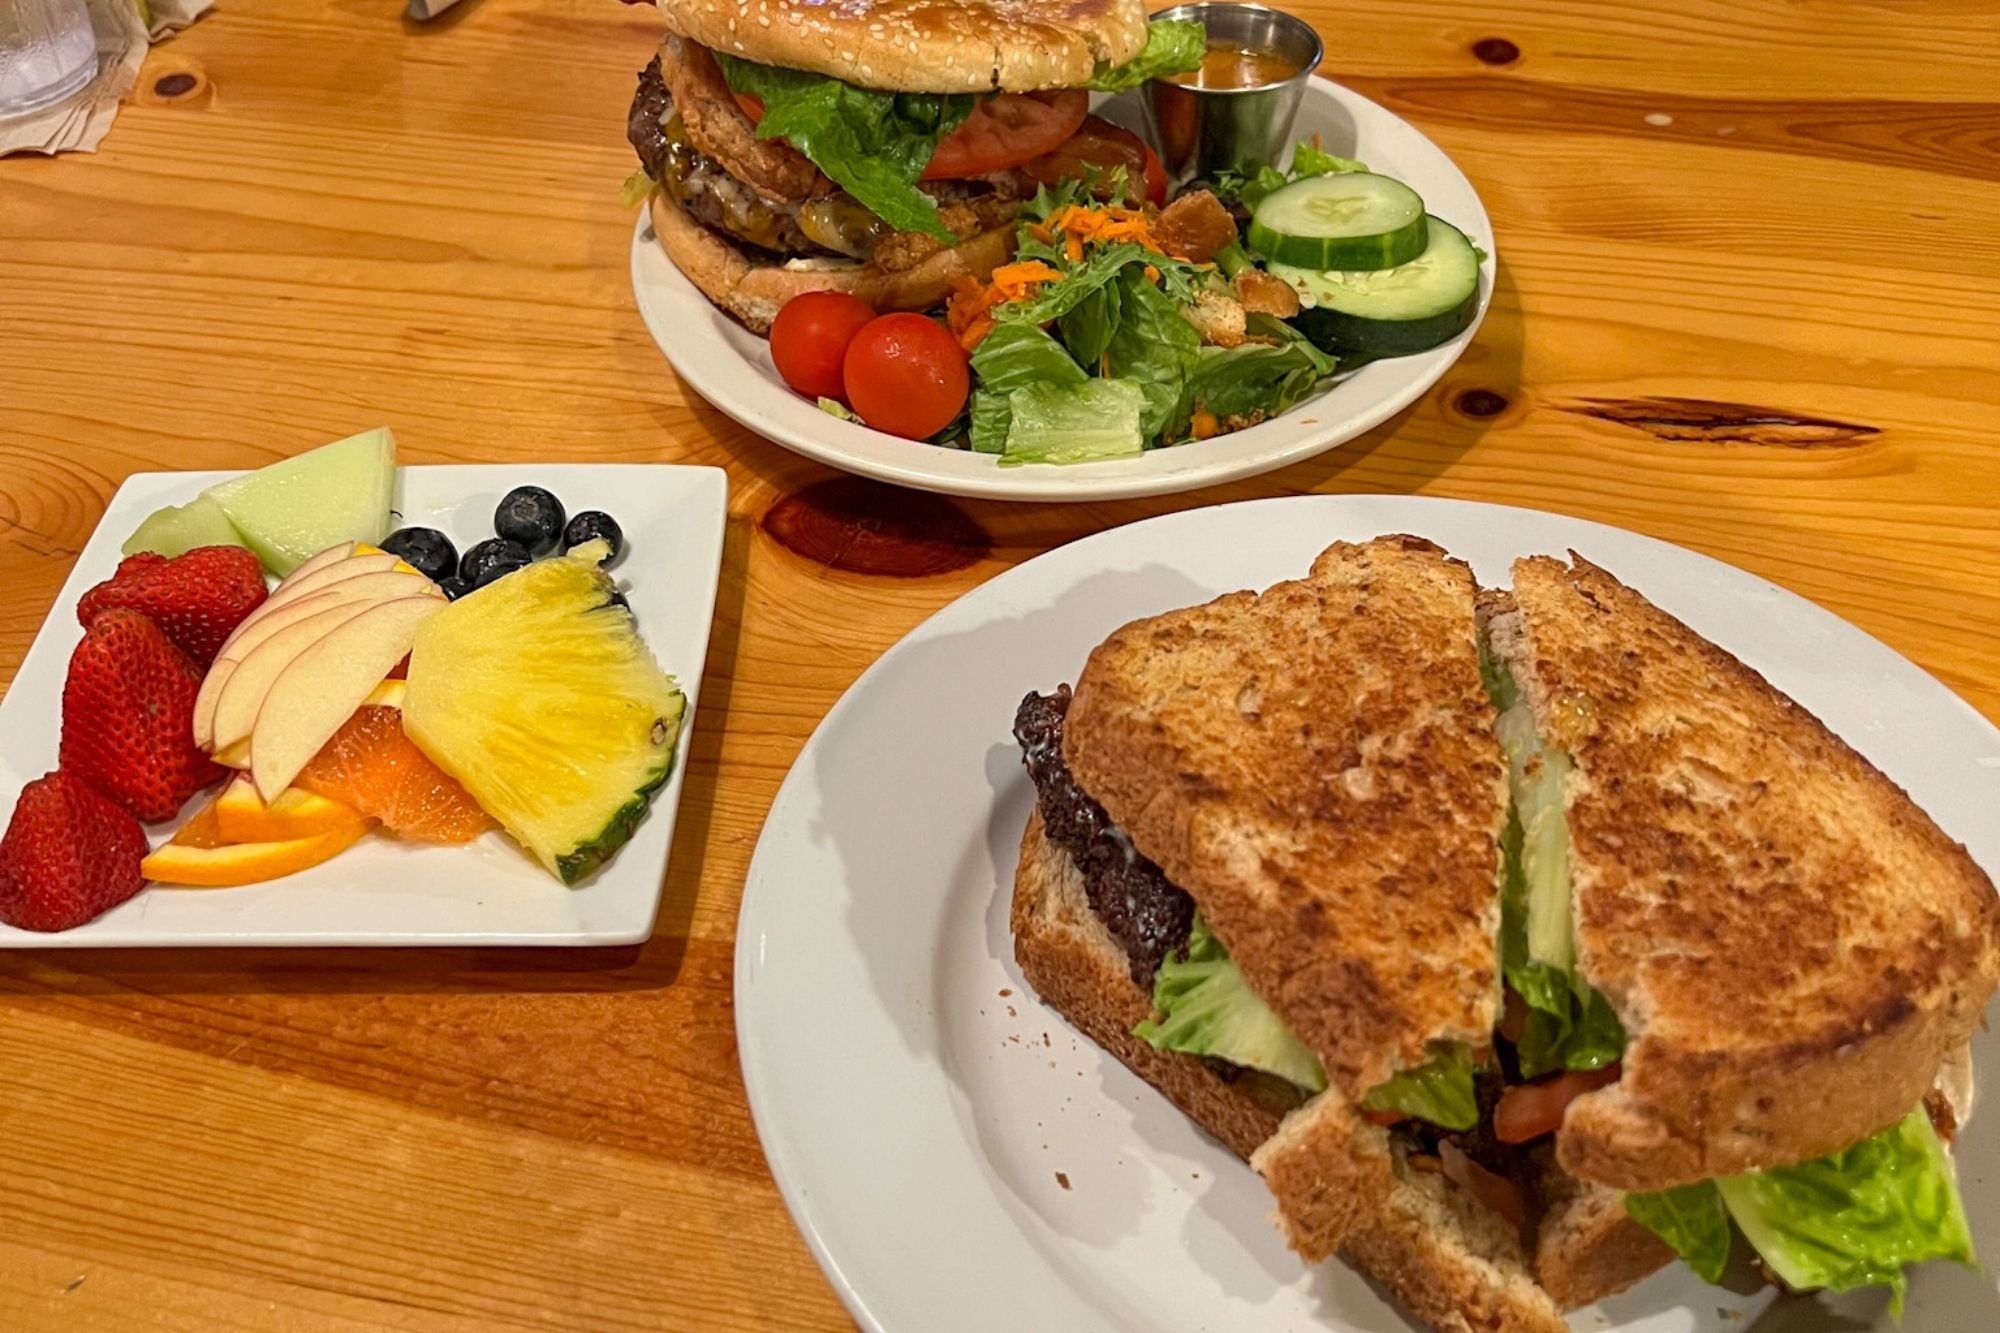 A burger, a sandwich, and a fruit plate